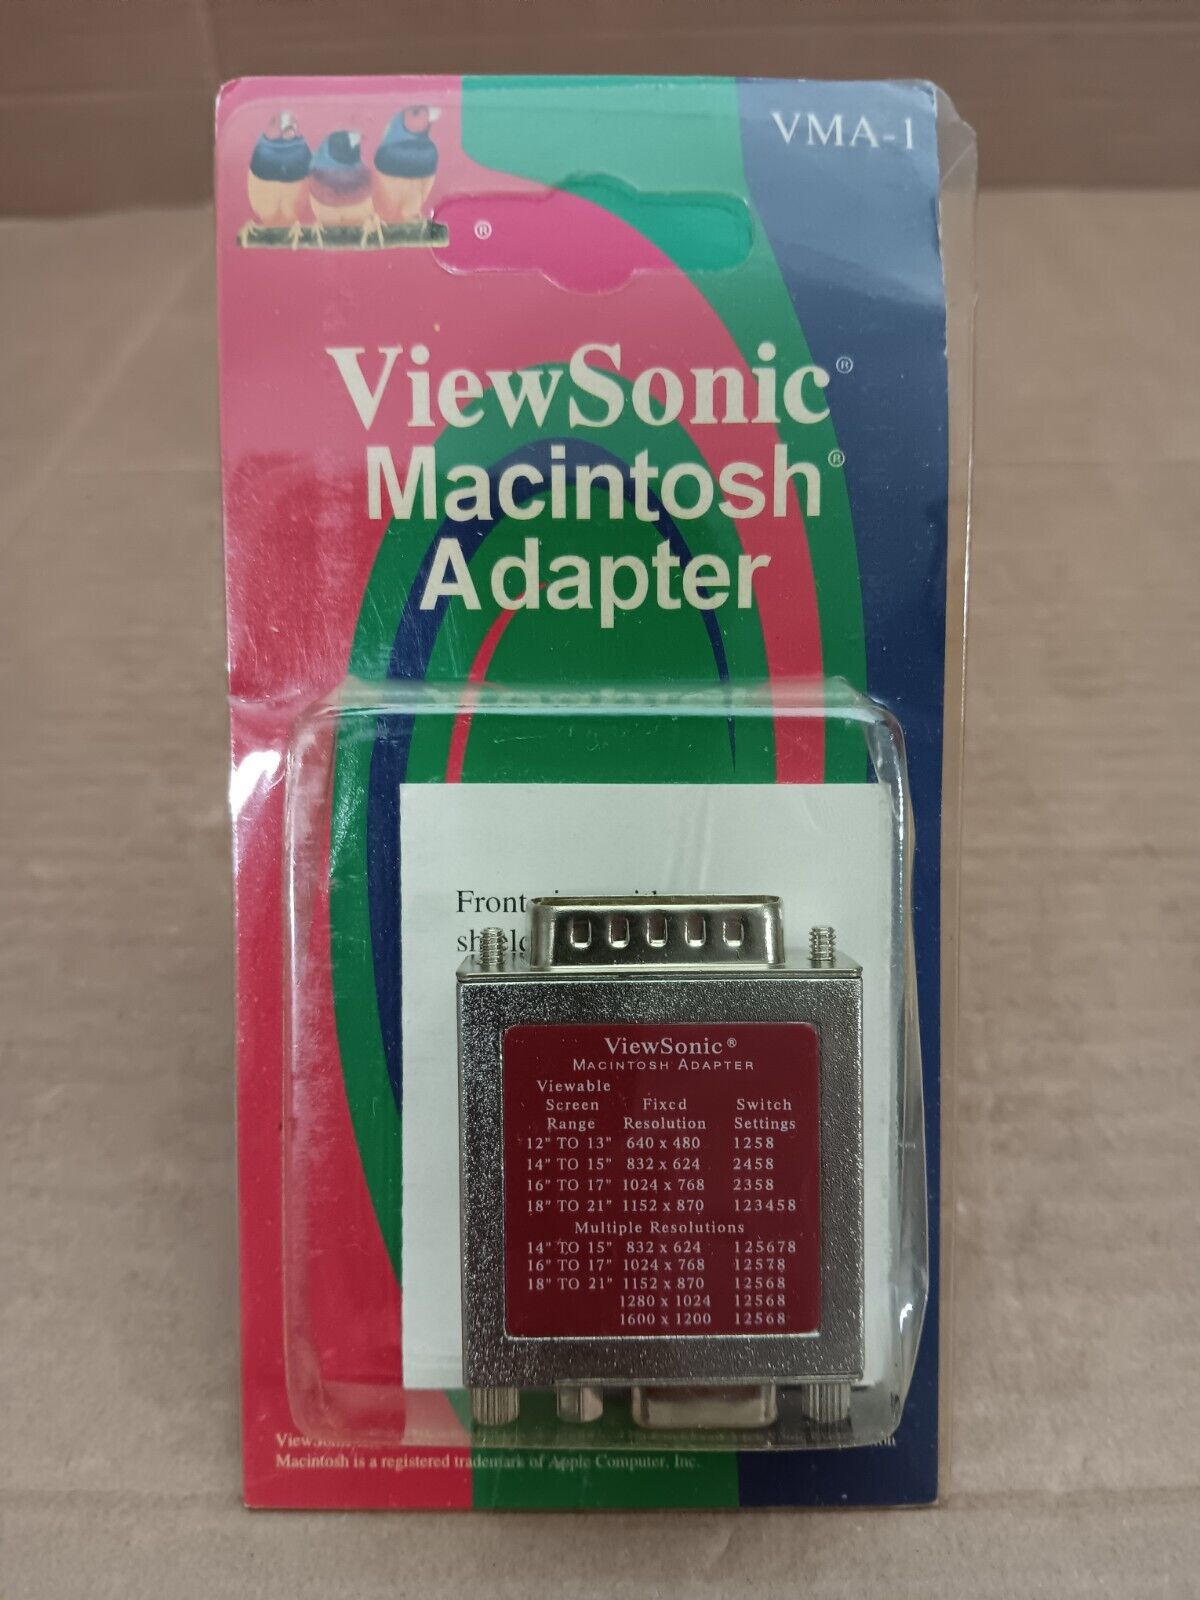 Viewsonic VMA-1 Macintosh Video Adapter for Apple